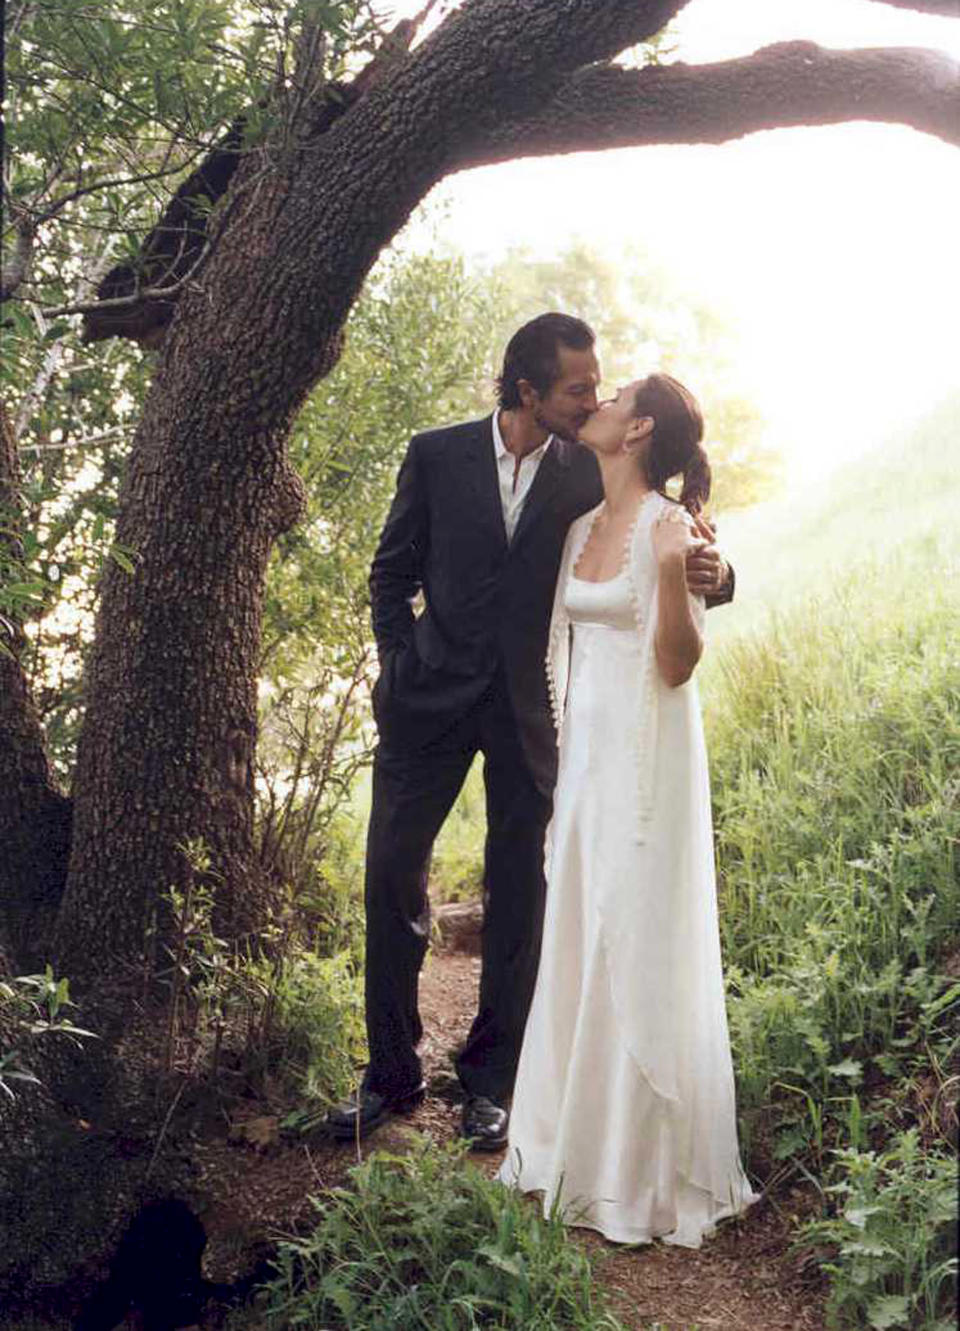 Benjamin Bratt and Talisa Soto kiss on their wedding day April 13, 2002, in San Francisco.